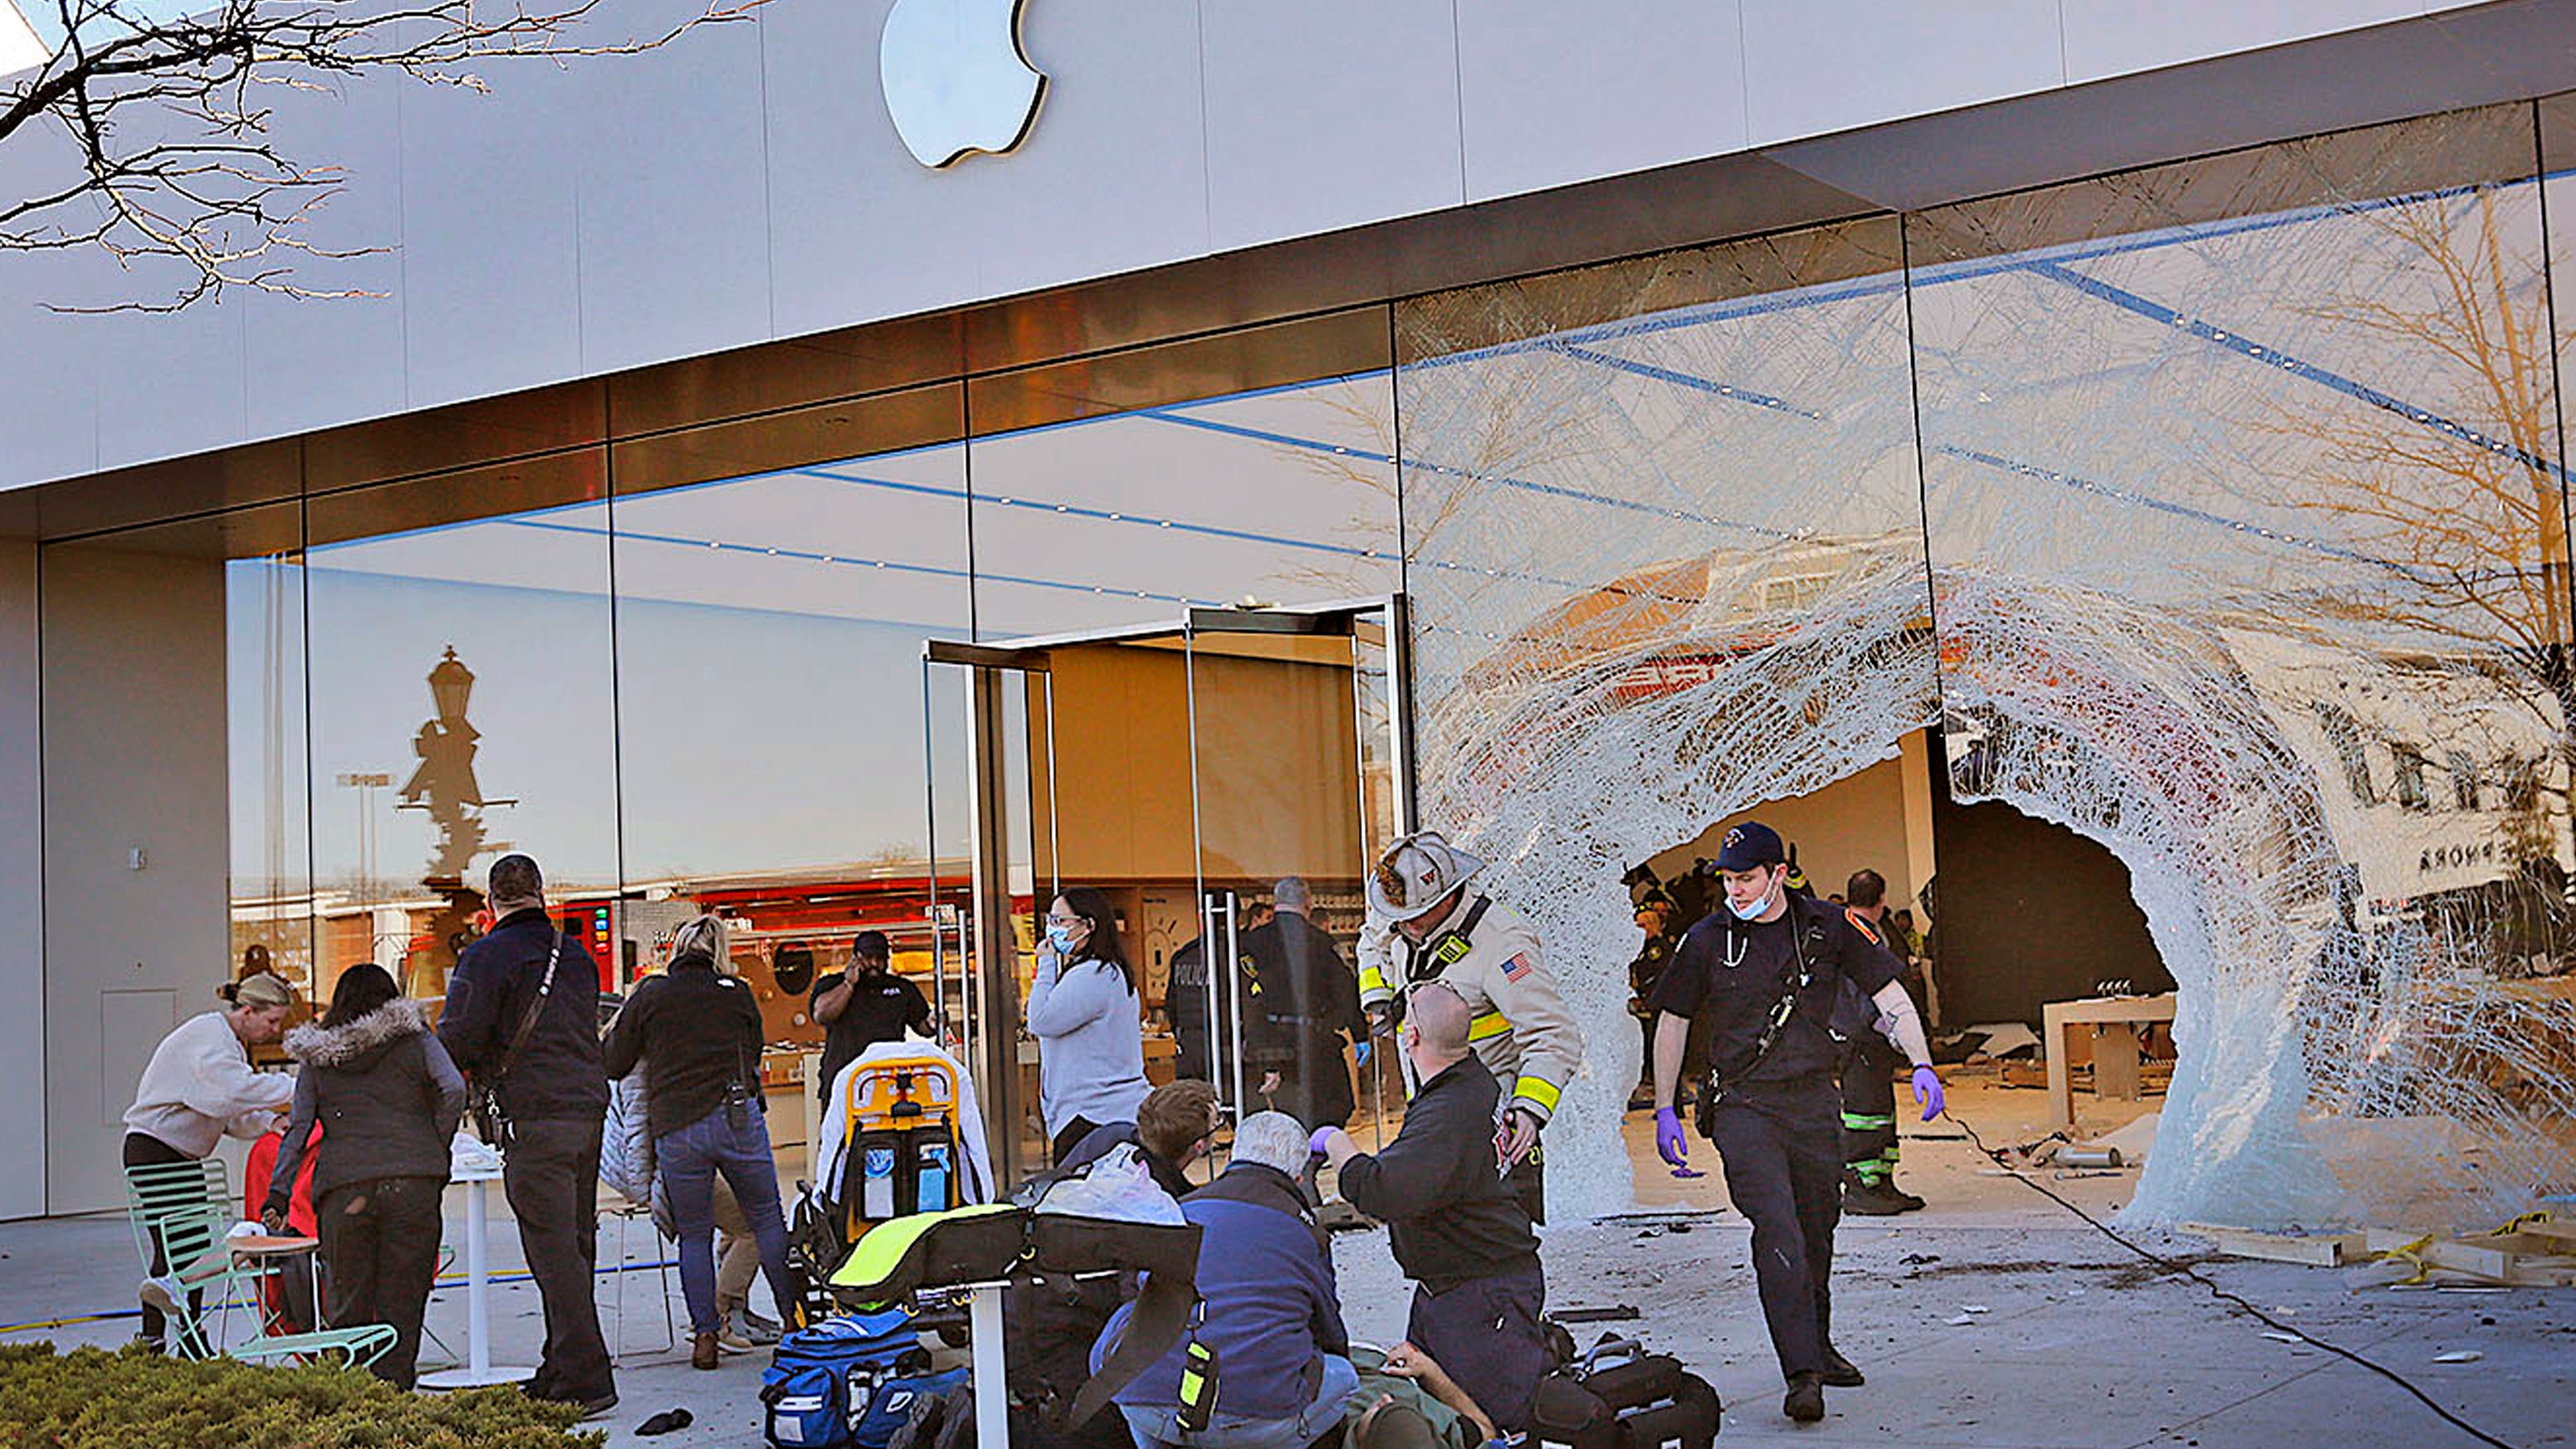 Новости апл на сегодня. Магазин Apple. Apple новости. New York times внутри здания. Медуза эпл стор.